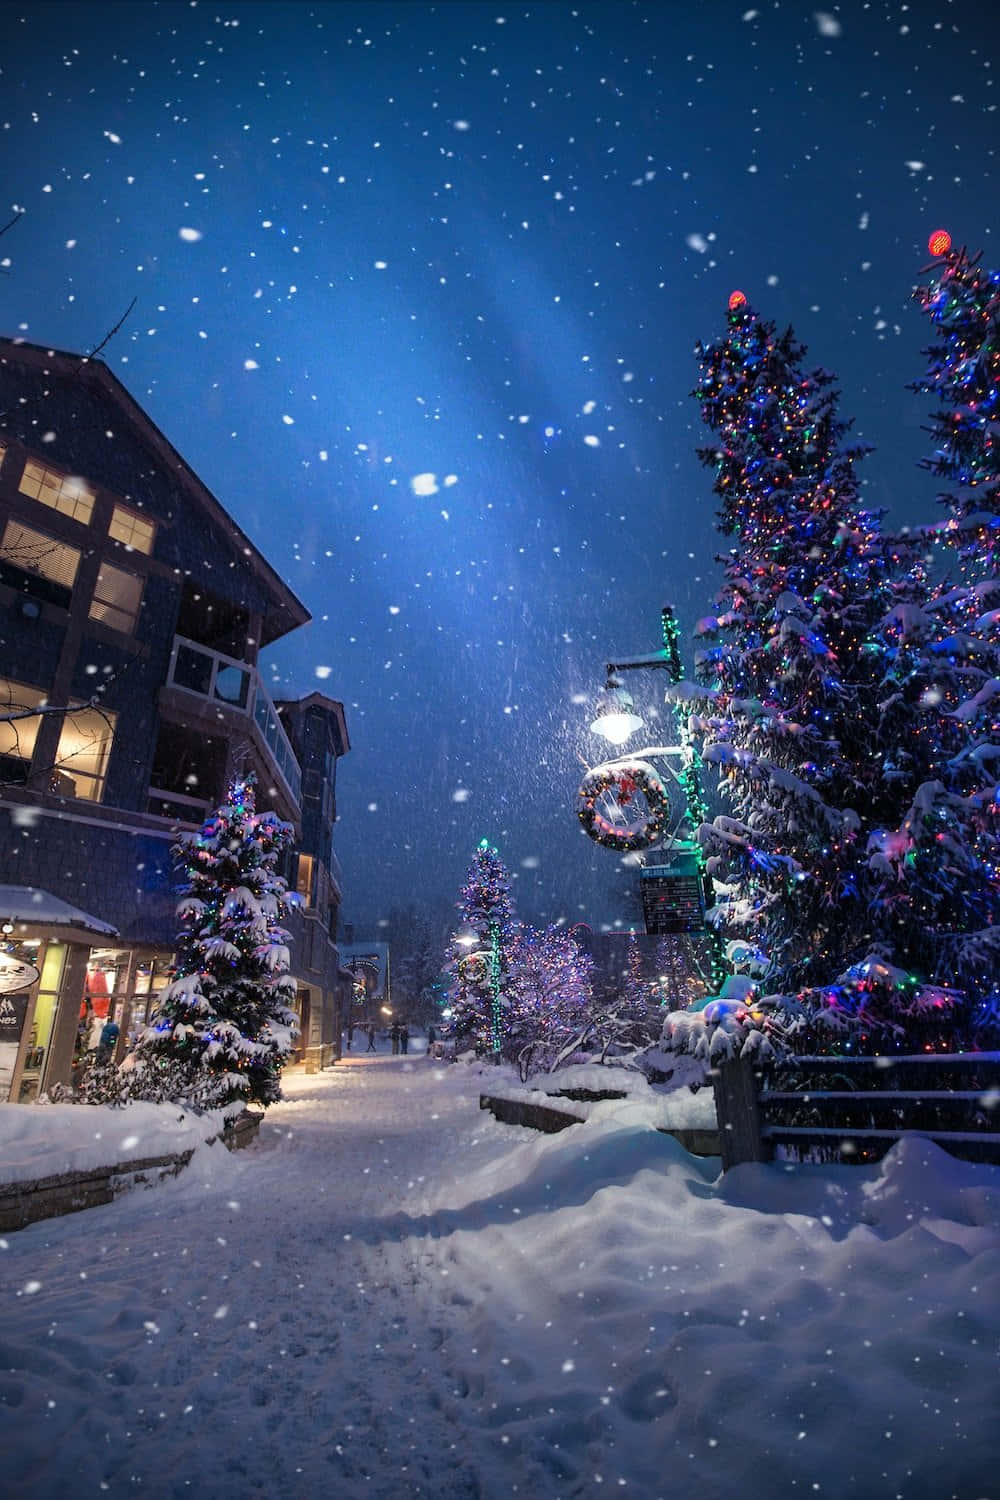 Cool Christmas Village Starry Night Sky